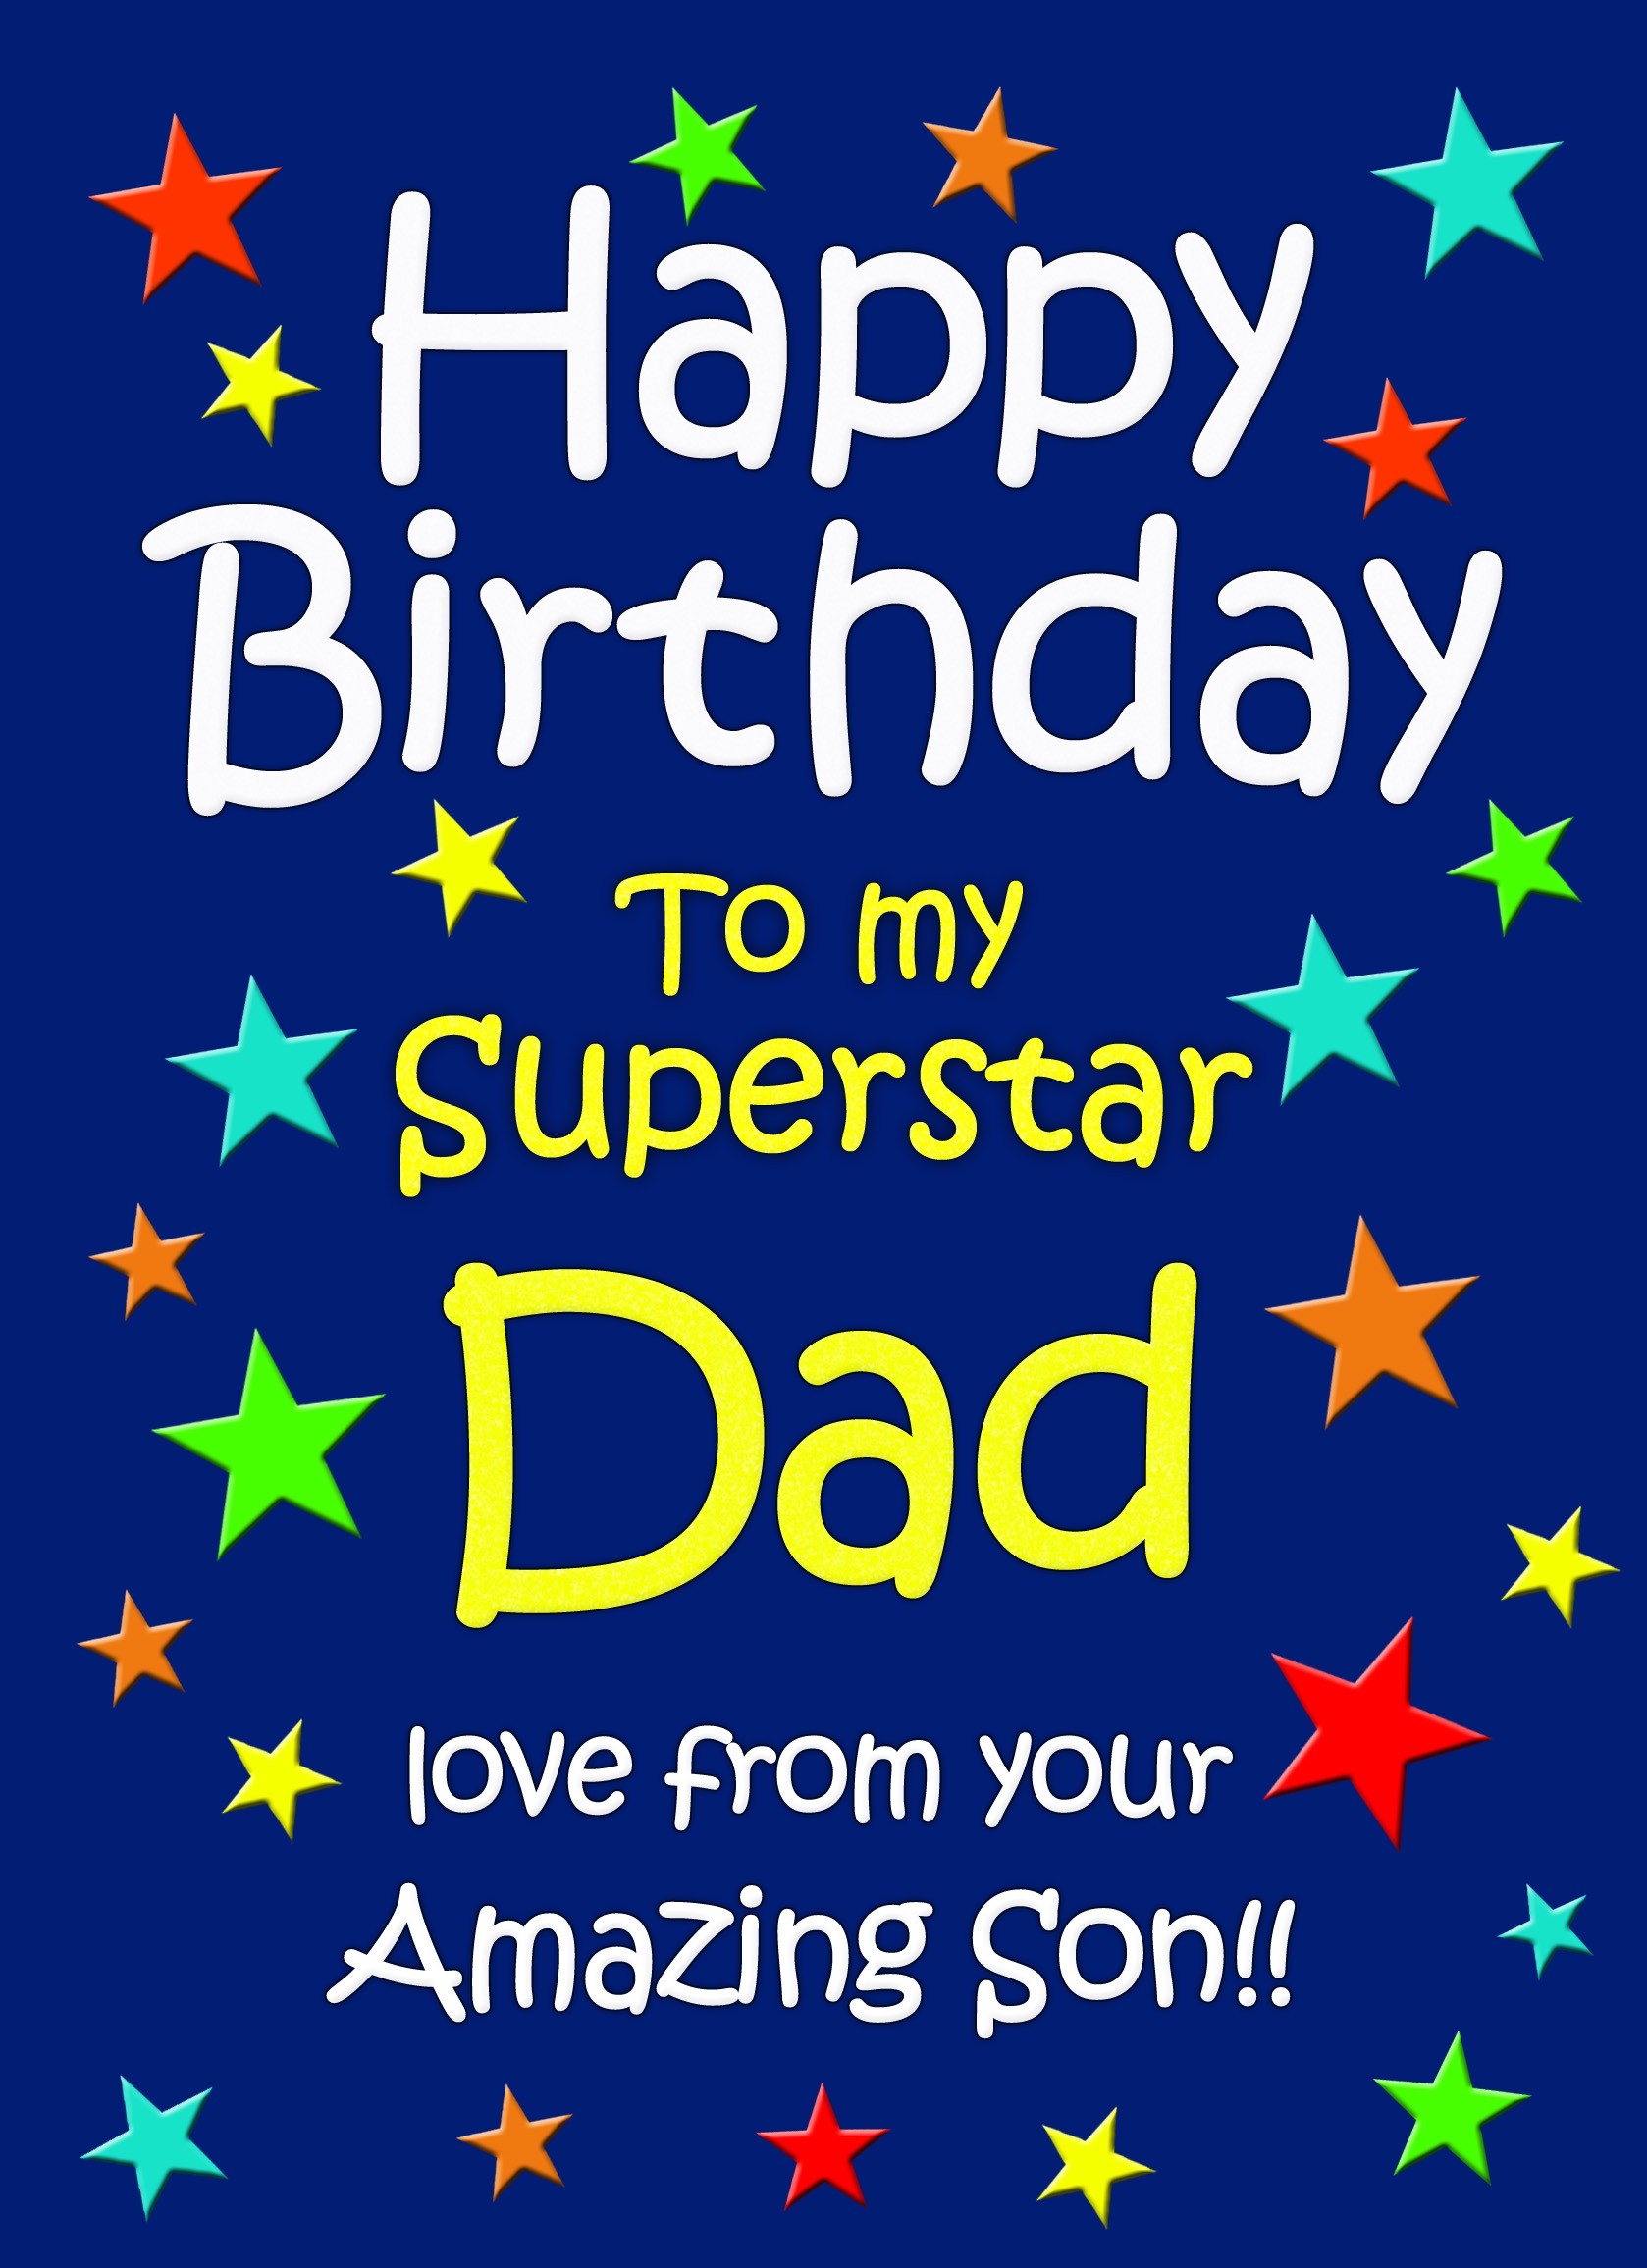 Dad Birthday Card from Son